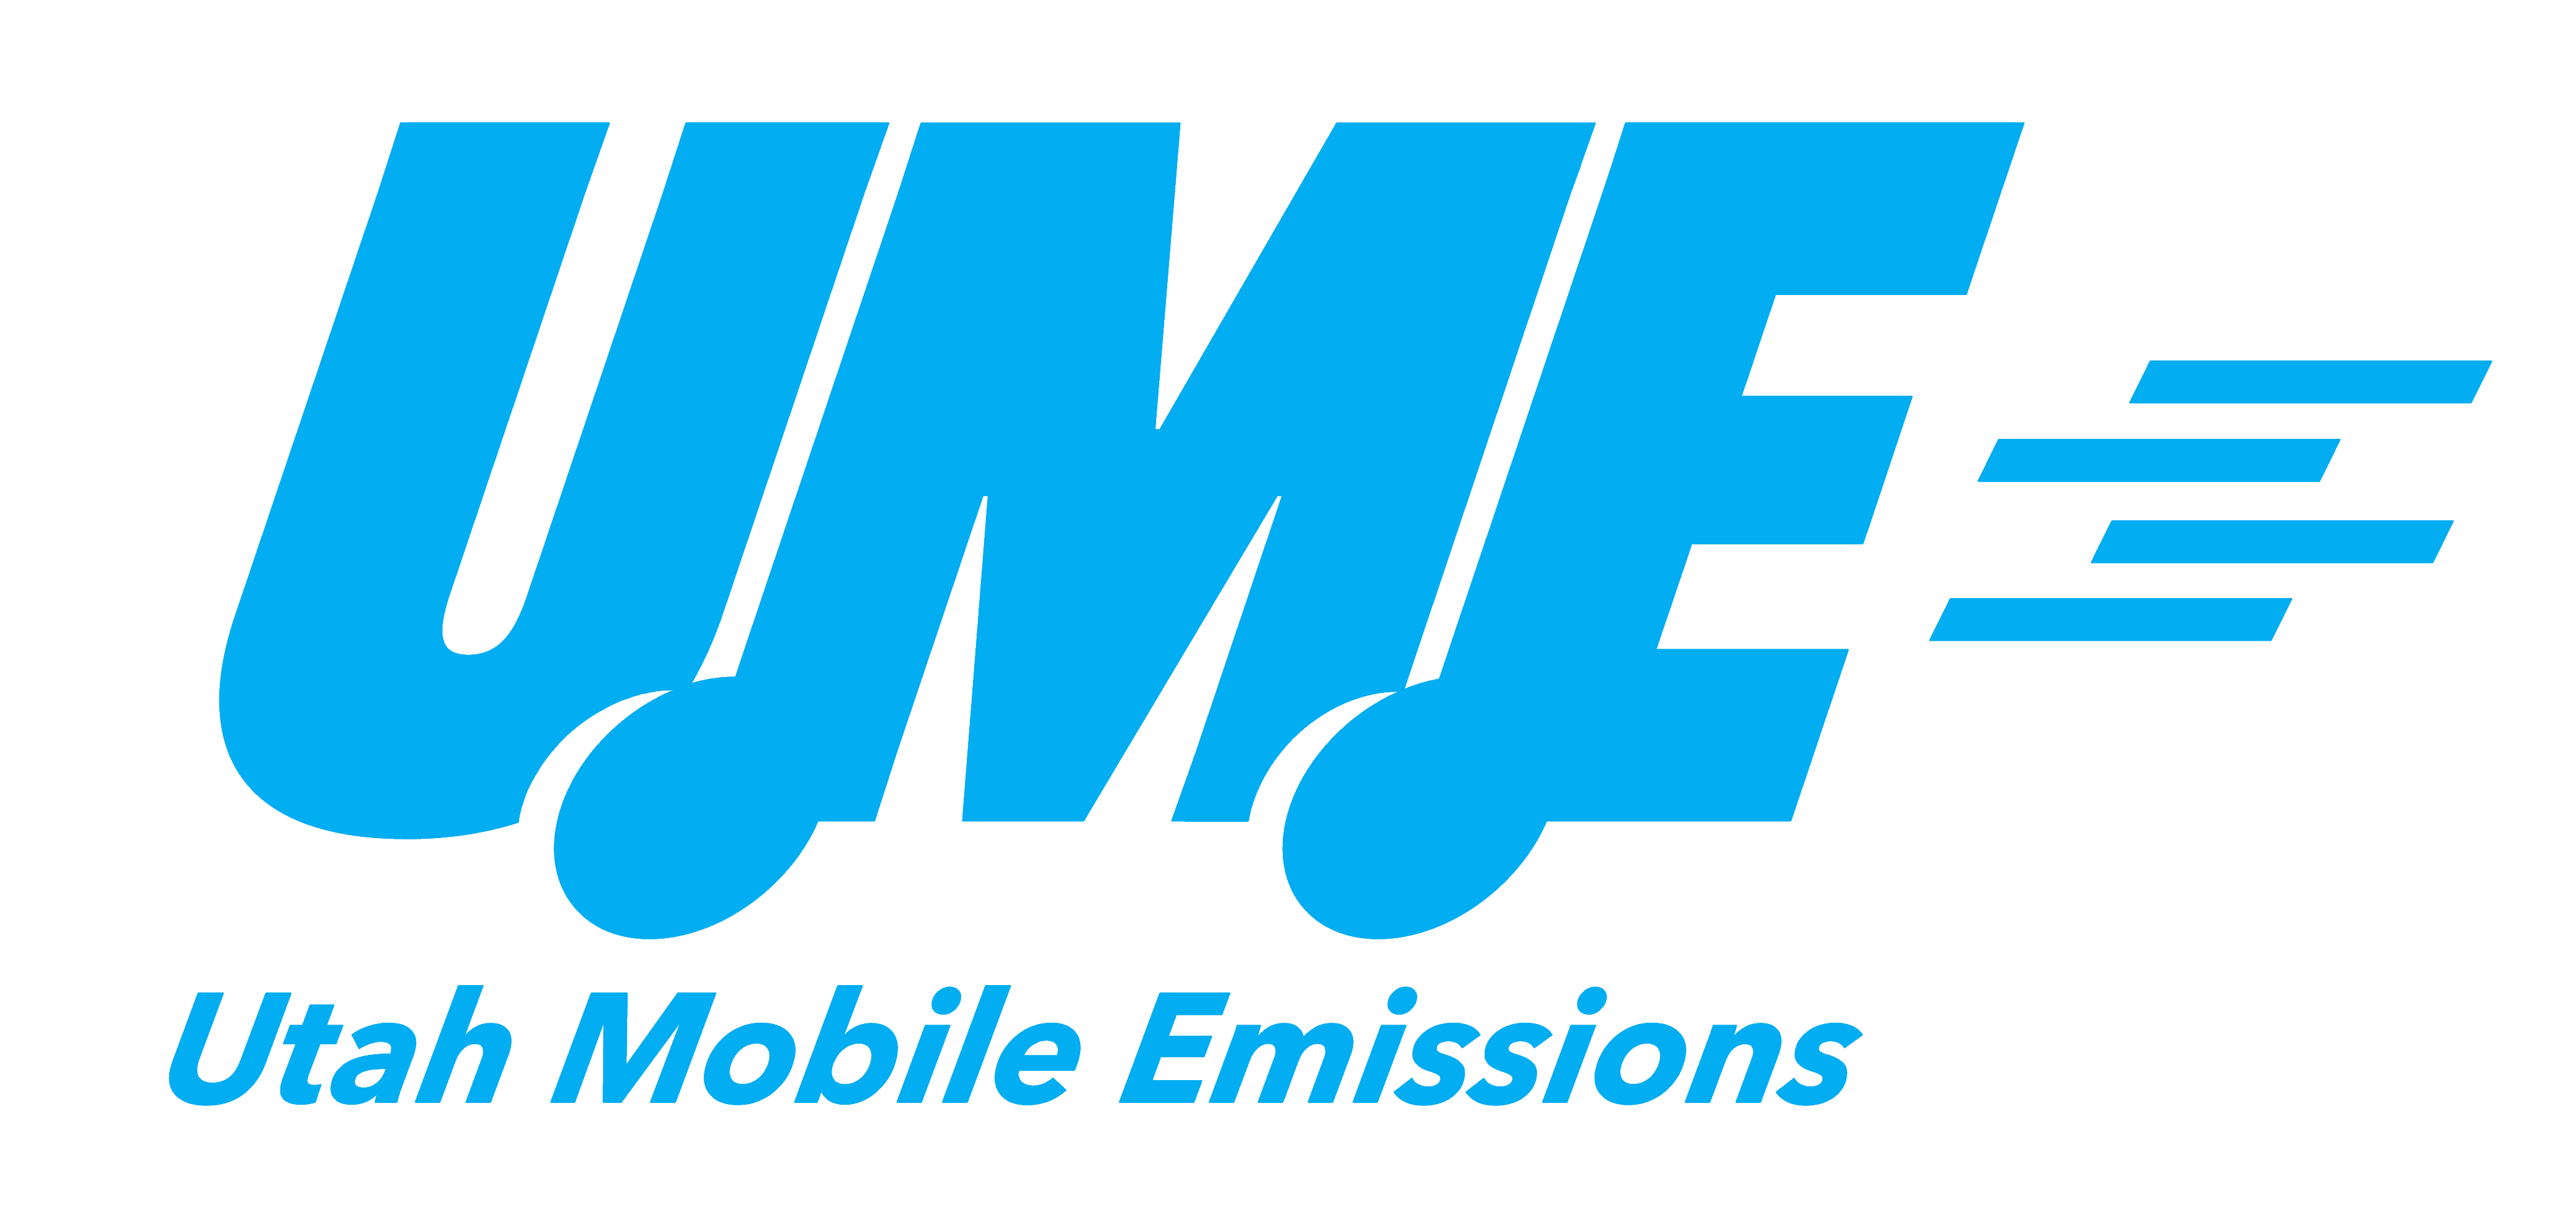 Utah Mobile Emissions